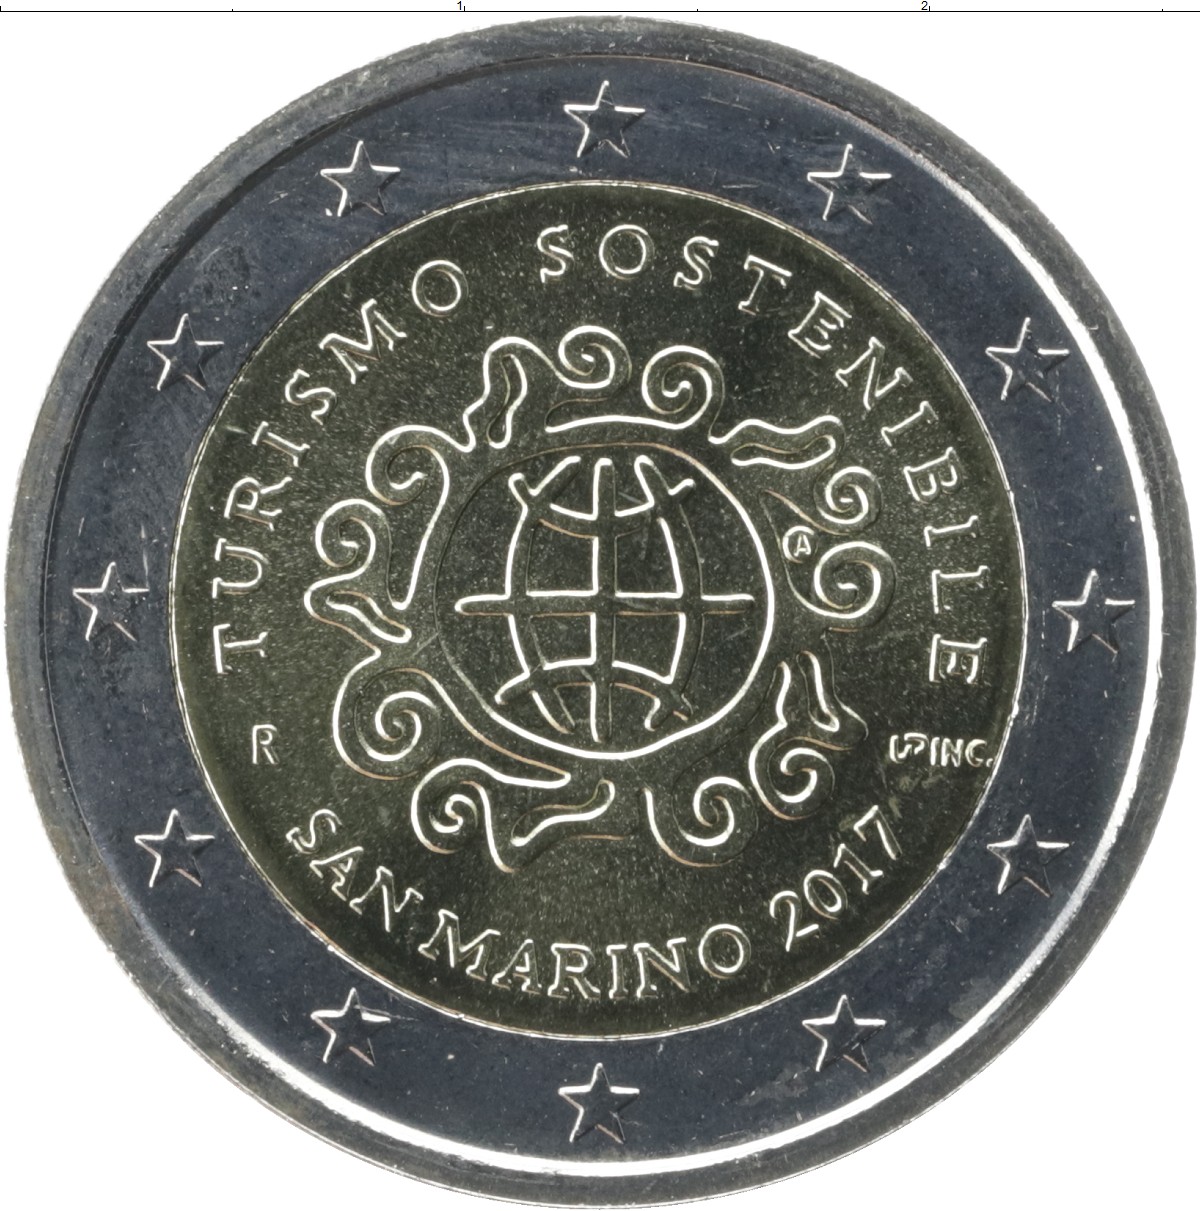 Евро сан марино. Монеты 2 евро Сан Марино 2017. Монета 2 евро Giotto Сан Марино 2017. 2 Евро Сан Марино 2019.